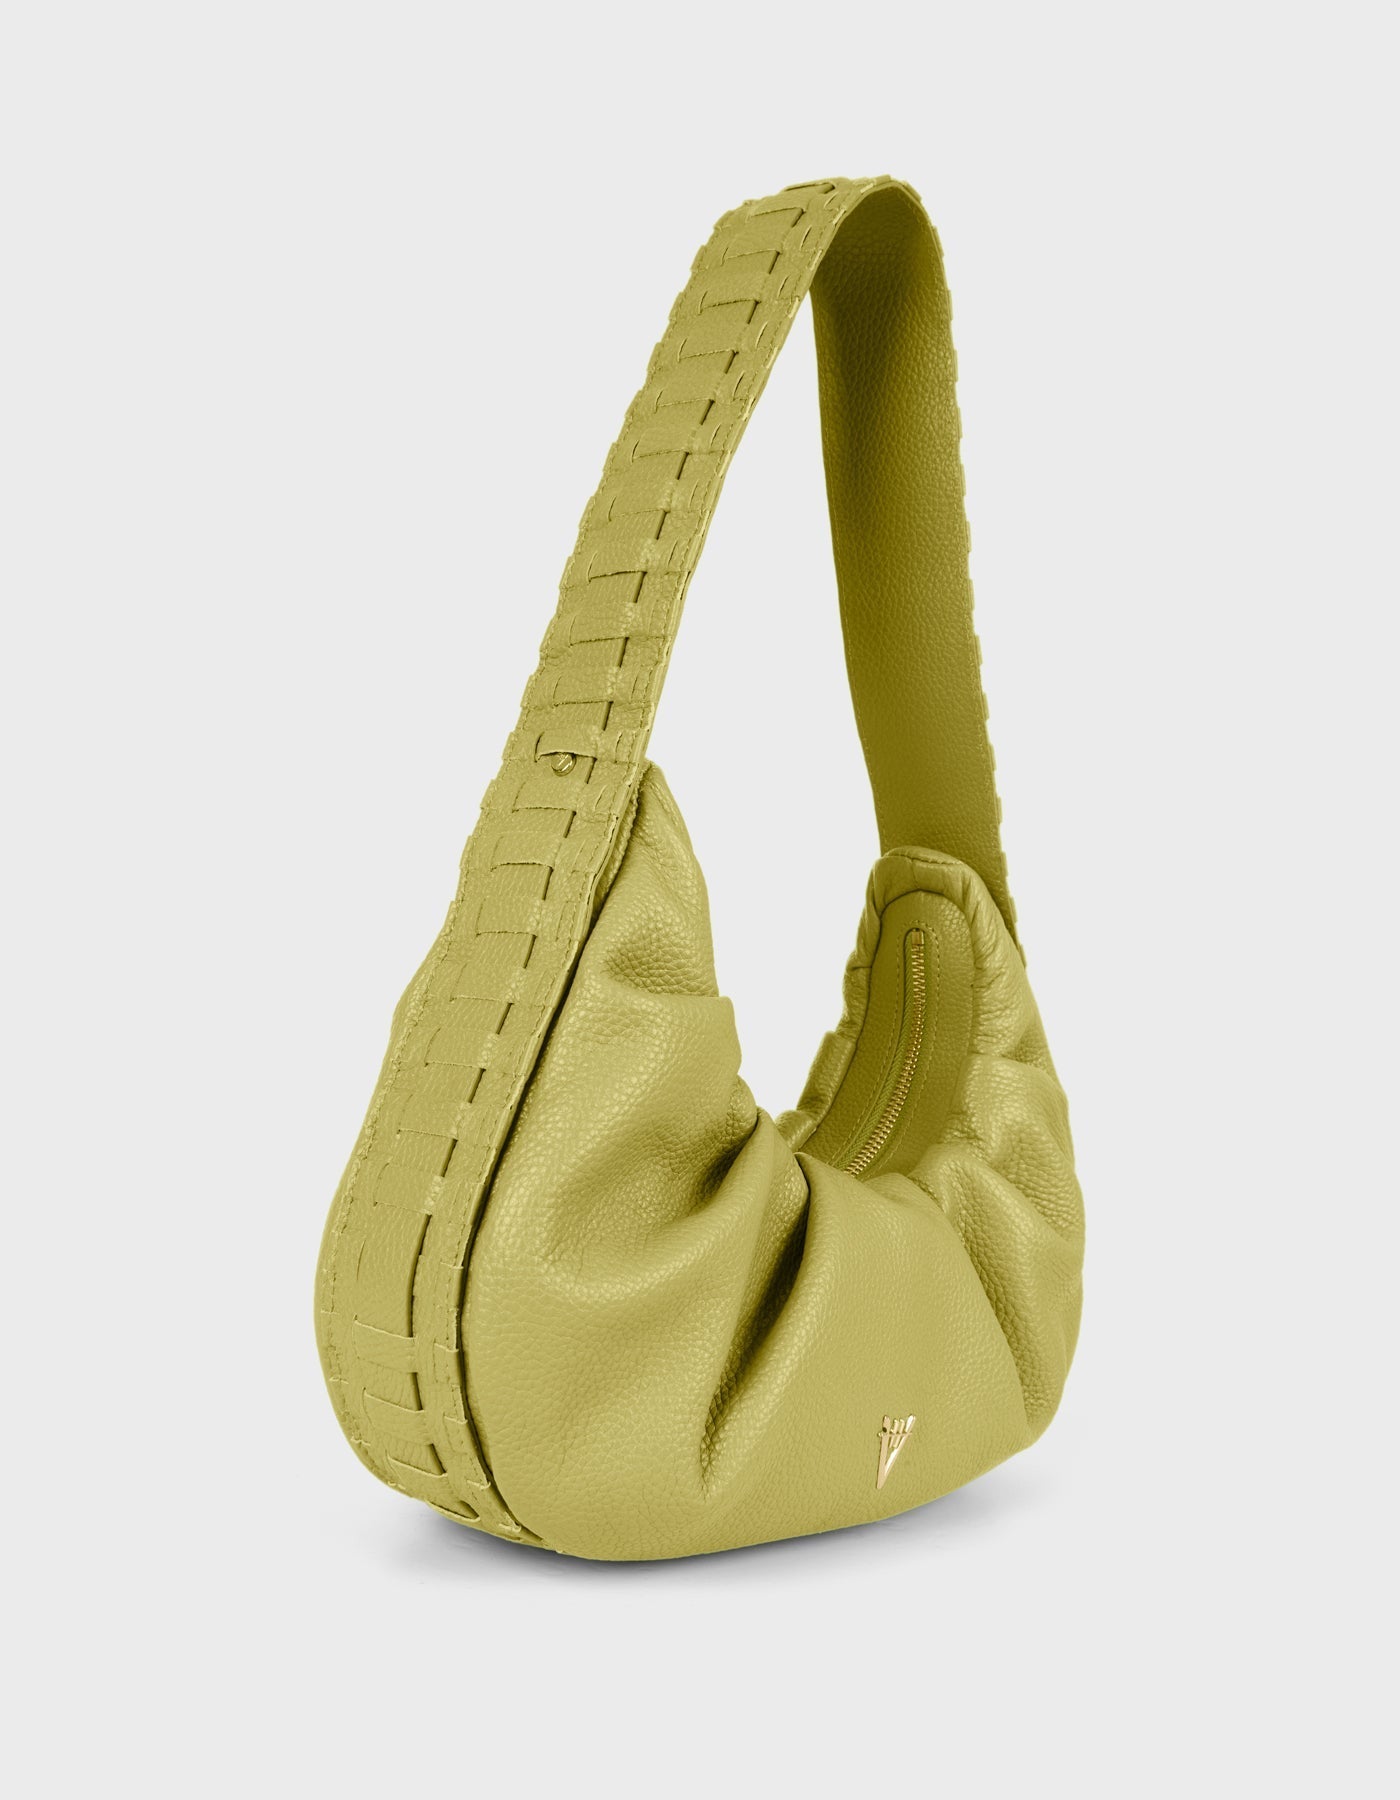 HiVa Atelier | Croissant Bag Olive | Beautiful and Versatile